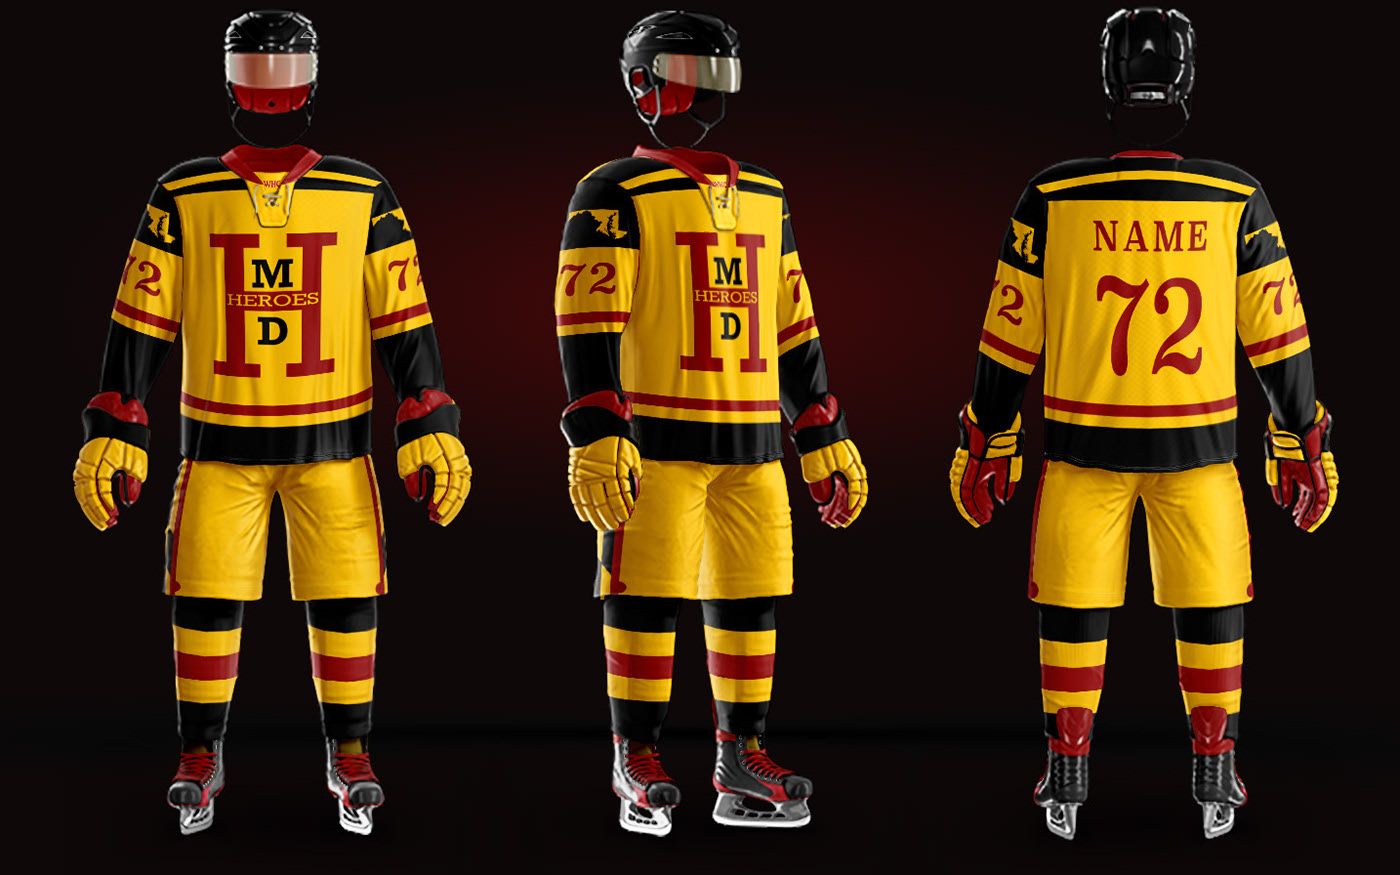 Beijing 2022 Hockey Jerseys Concepts on Behance